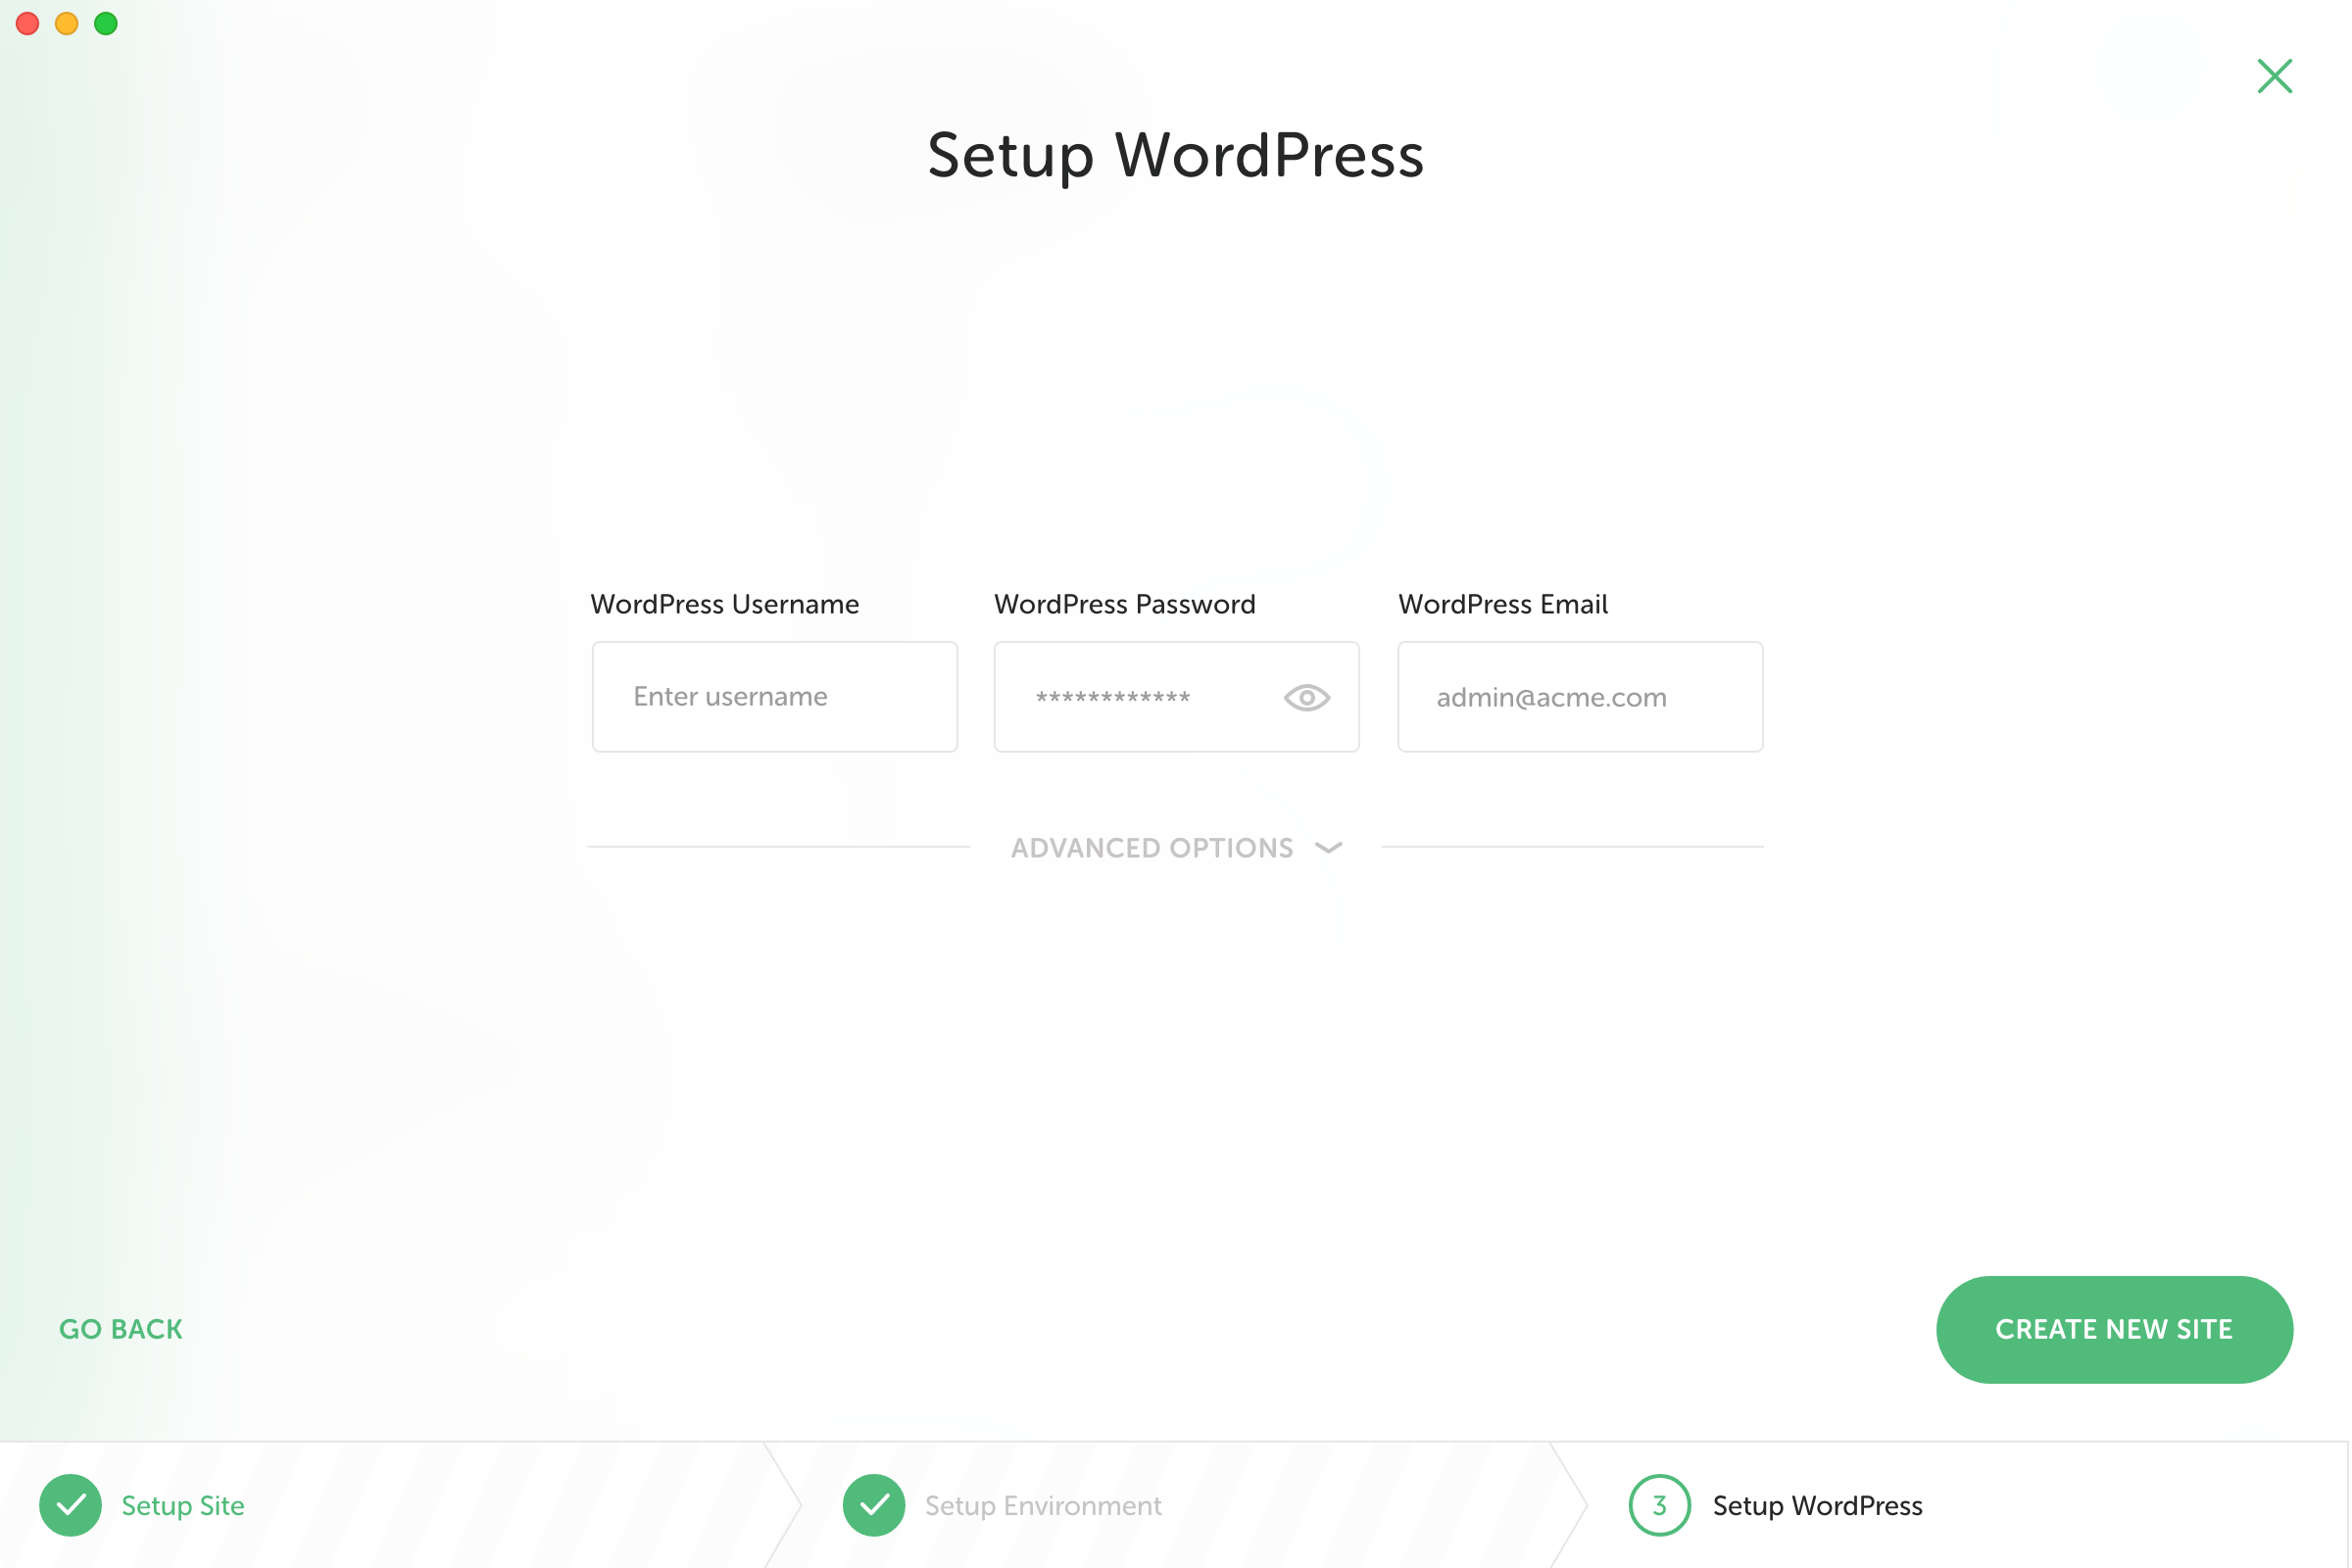 New-site-Setup-WordPress@2x-1